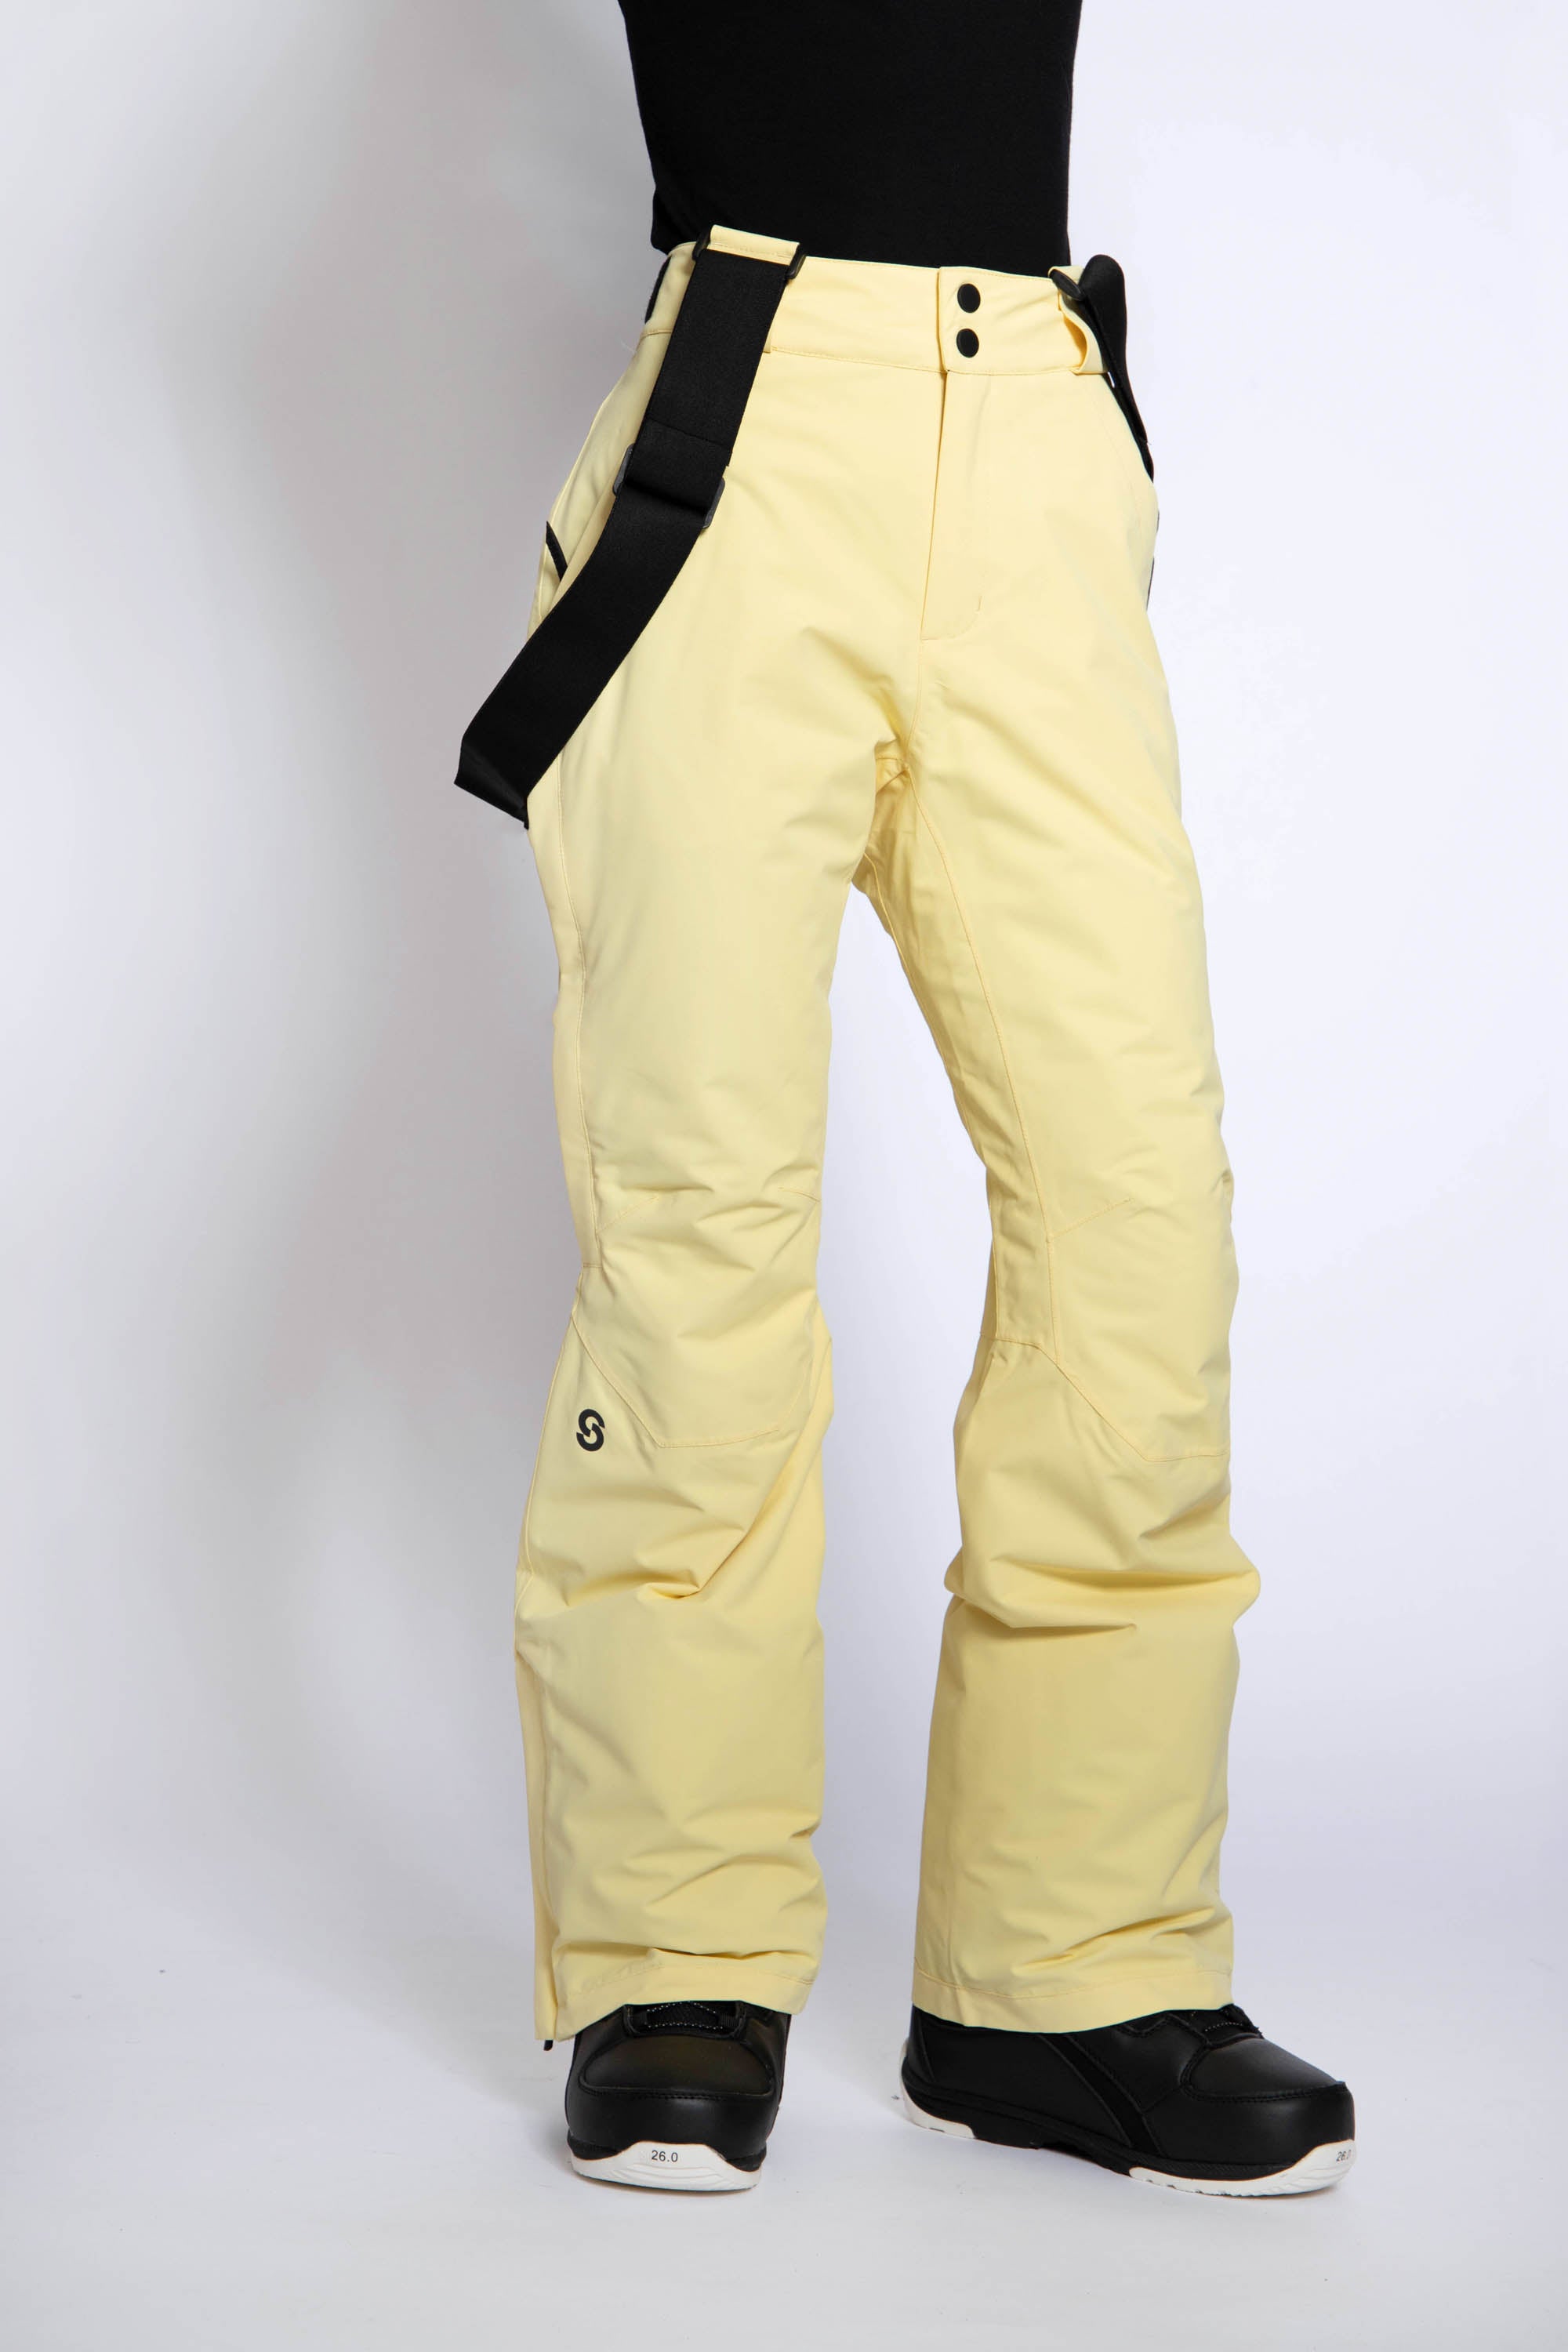 Renewed - Terra Ski Pants Lt Yellow - Medium - Women's